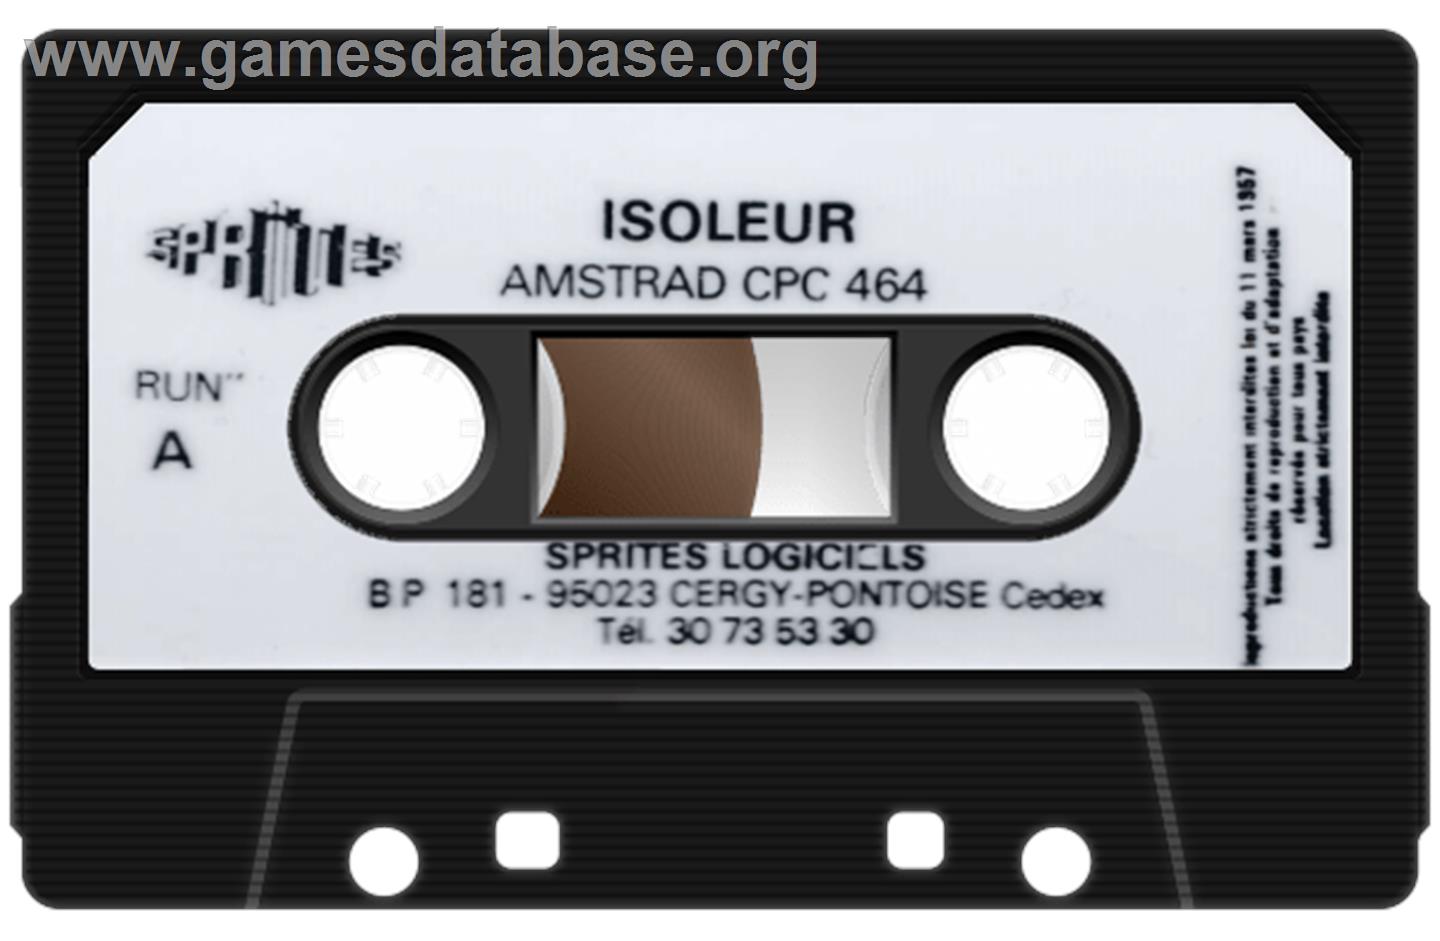 Isoleur - Amstrad CPC - Artwork - Cartridge